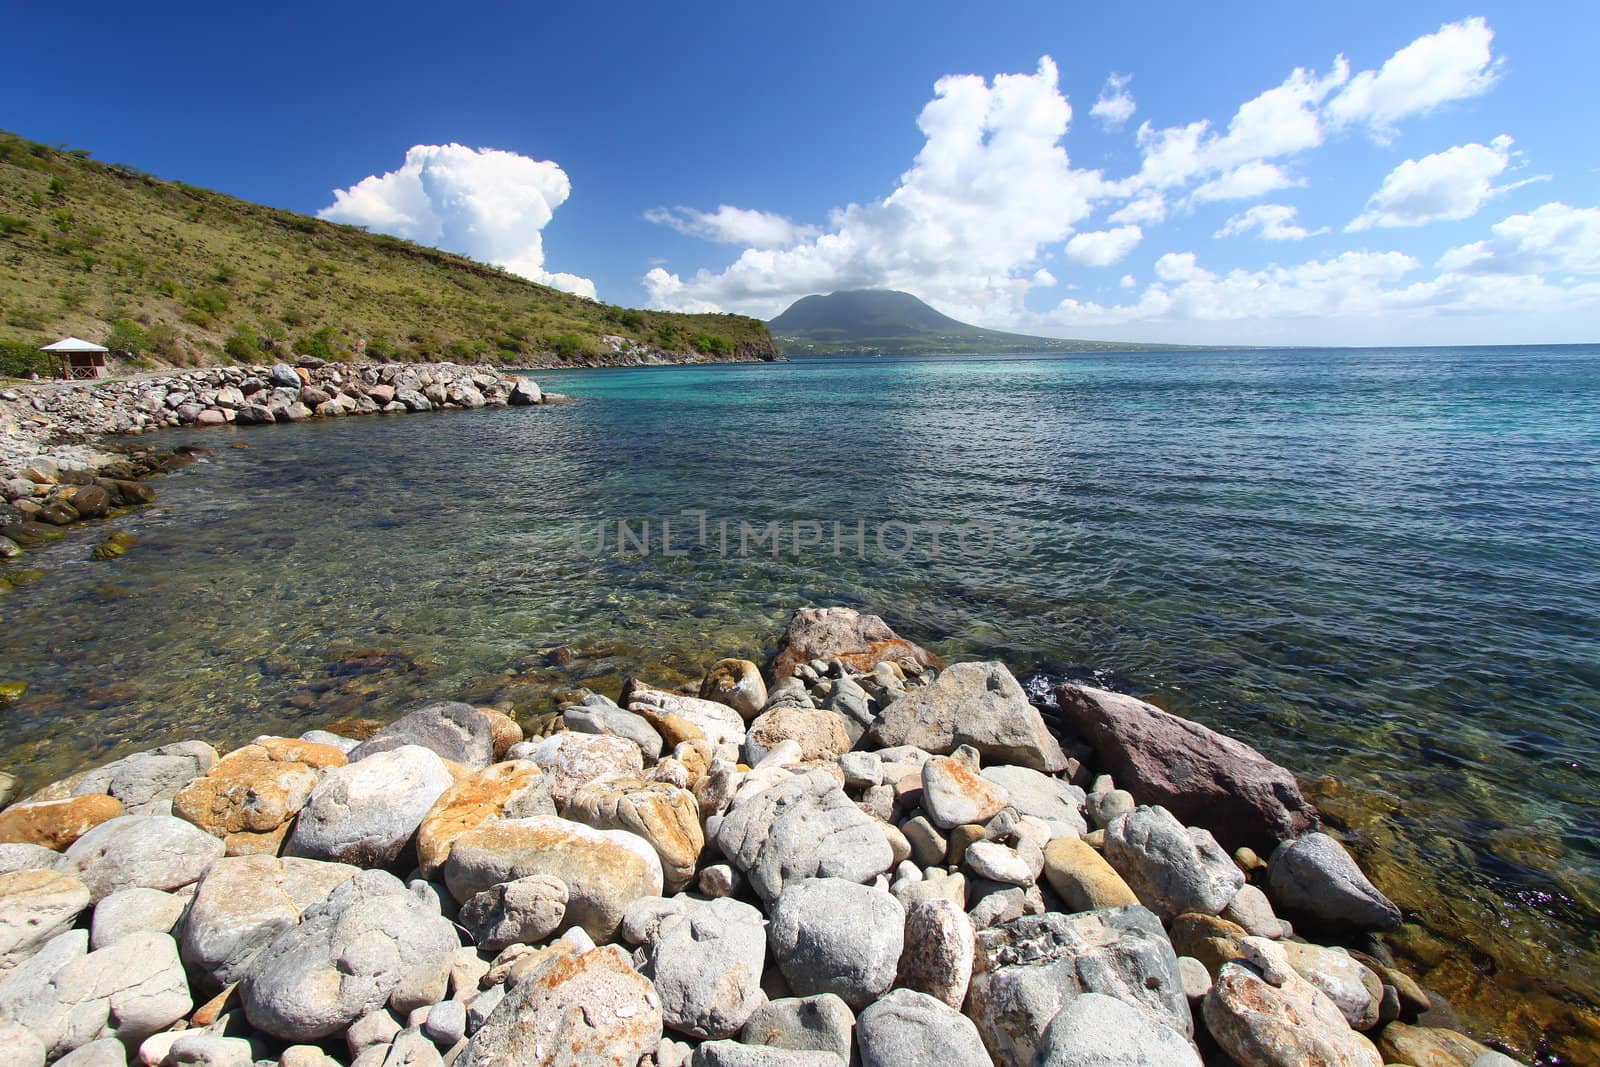 The rocky coastline on the island of Saint Kitts.